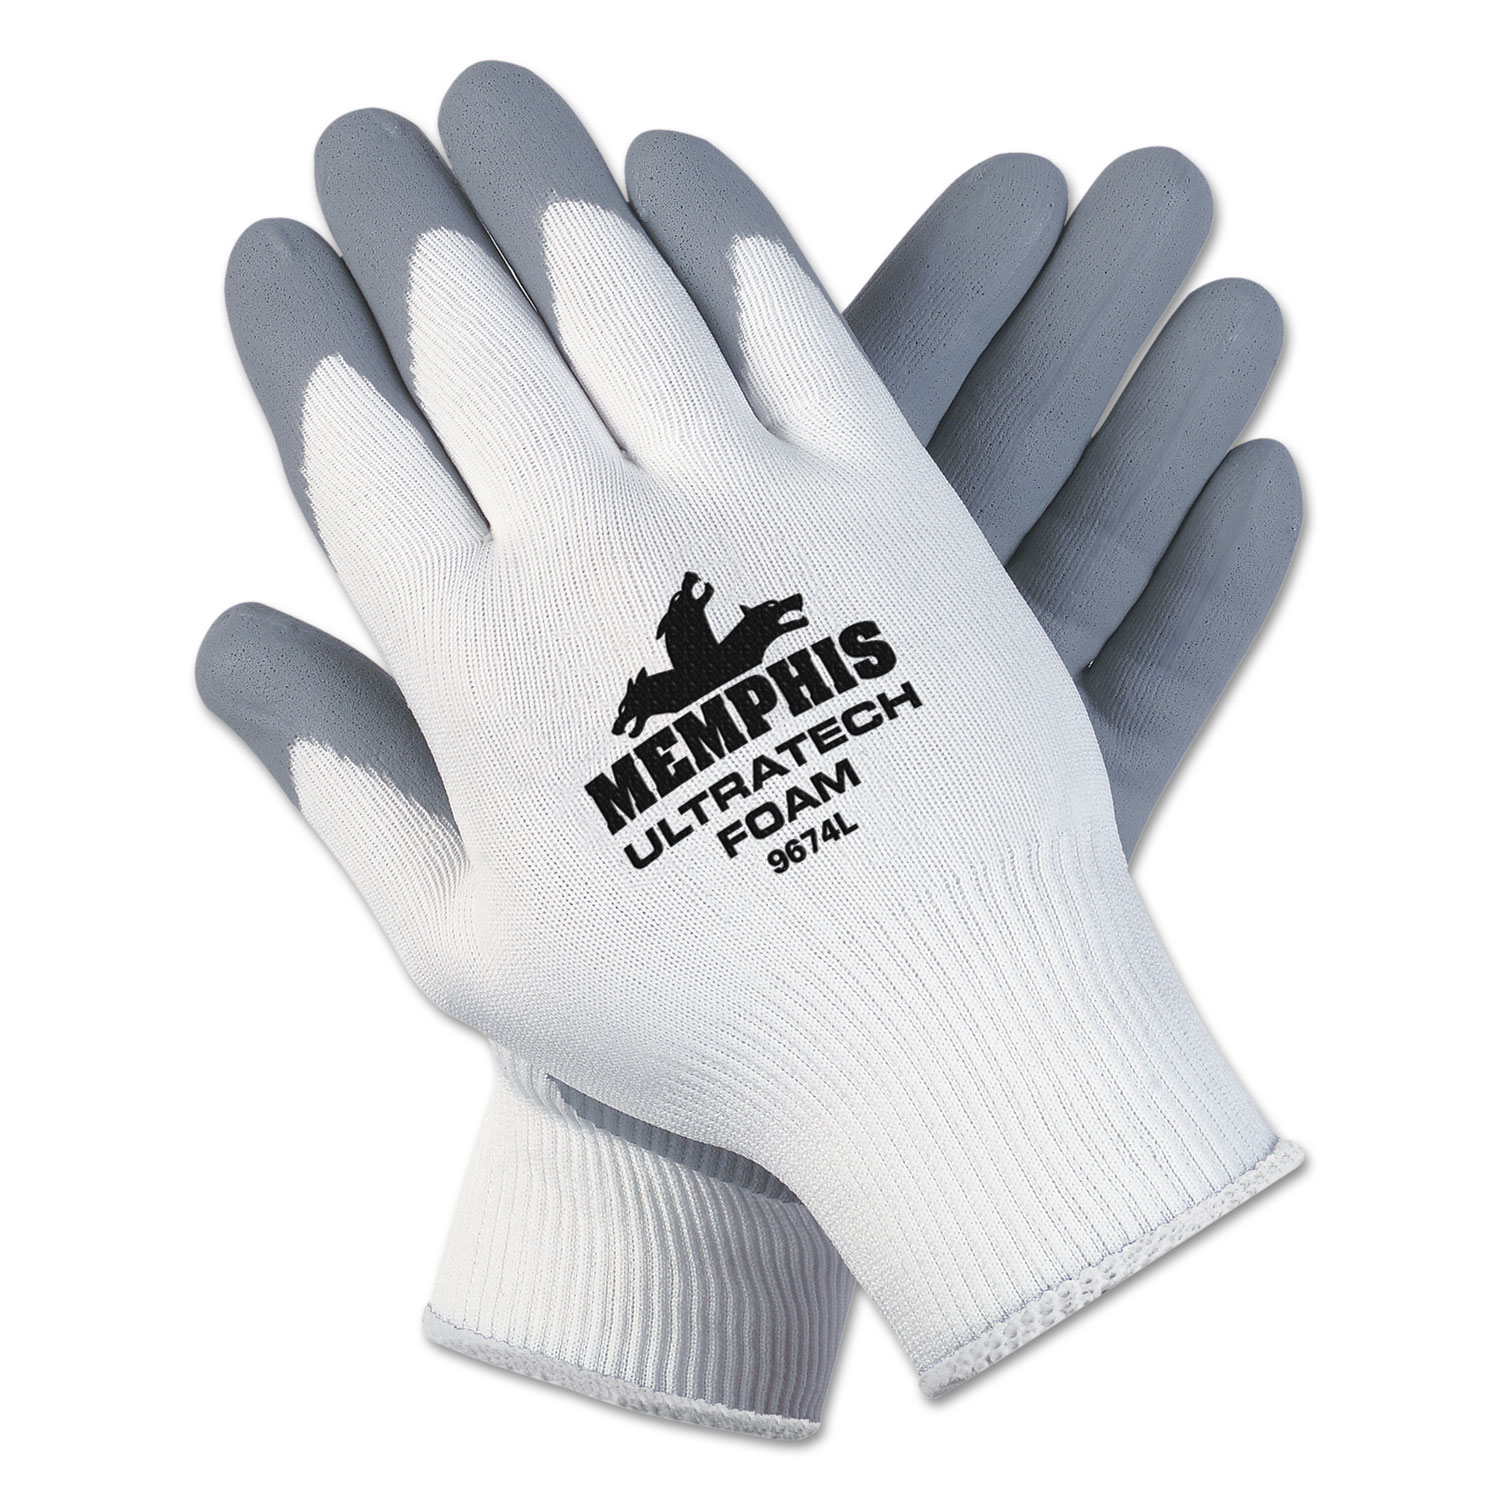 Ultra Tech Foam Seamless Nylon Knit Gloves, Medium, White/Gray, 12 Pair/Dozen